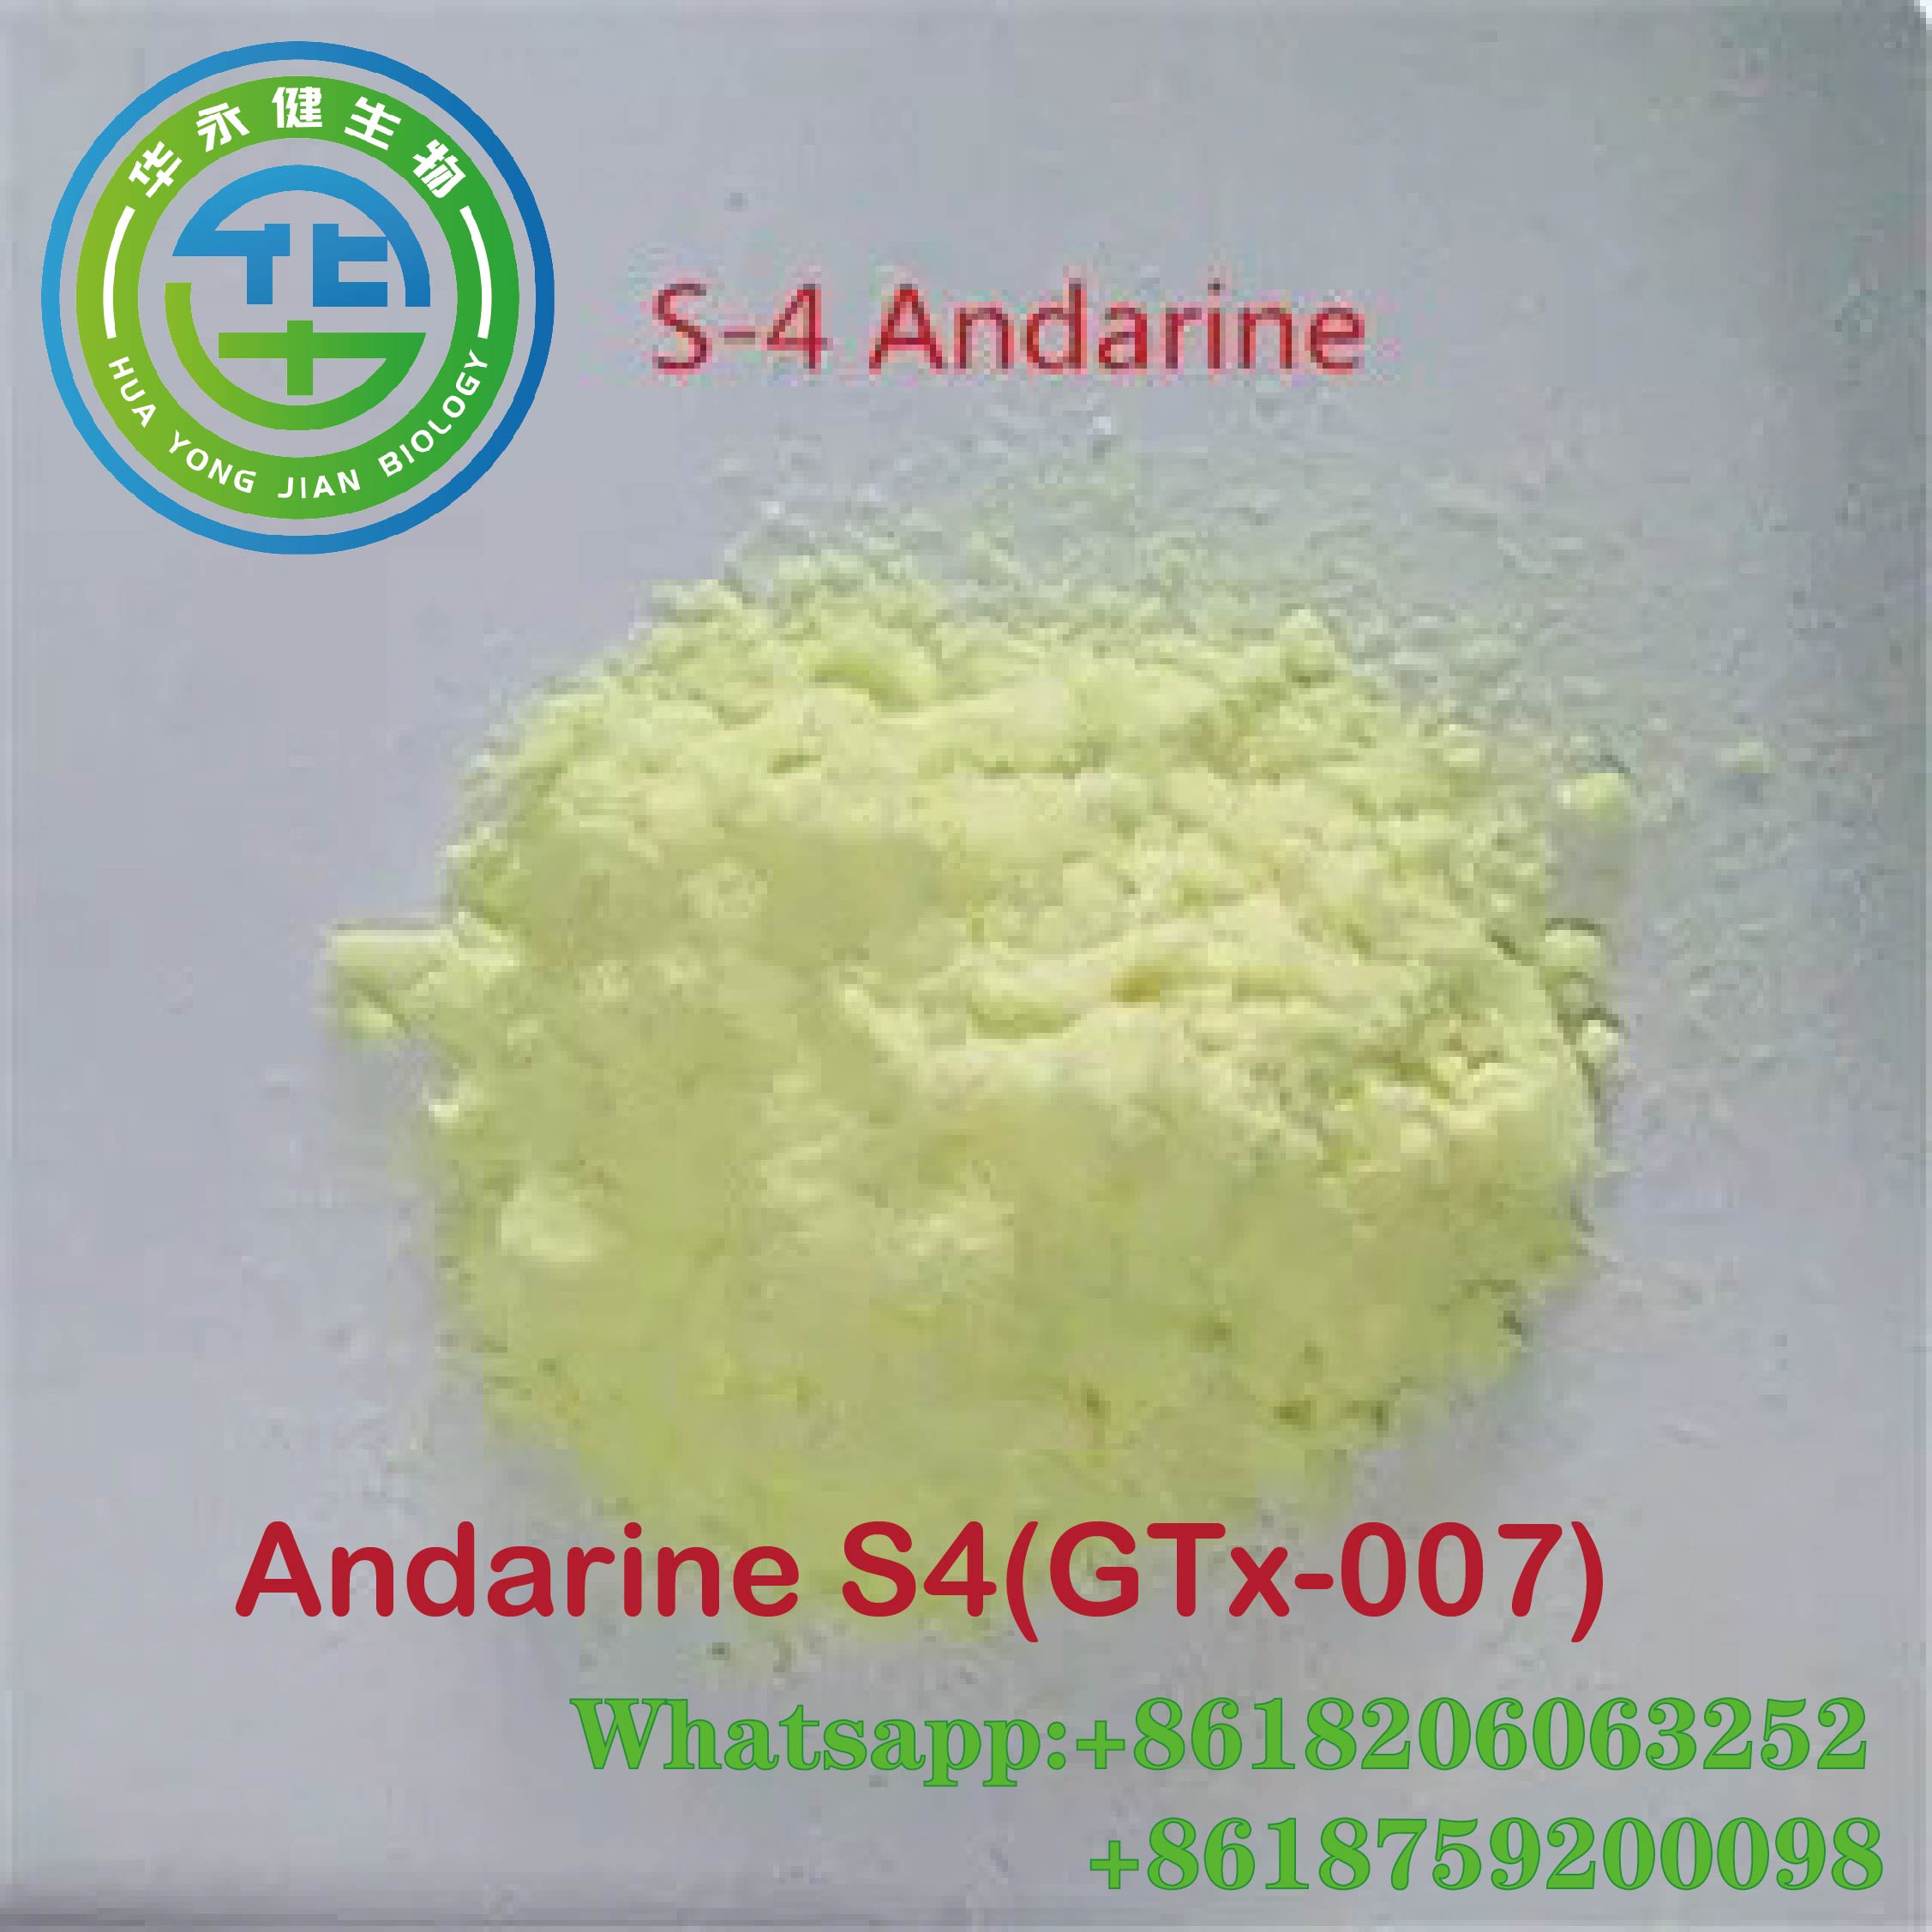 Andarine S4 Sarm Powder Steroids Powder CasNO.401900-40-1 Stealth Package 100% Sendingarábyrgð Peptíð